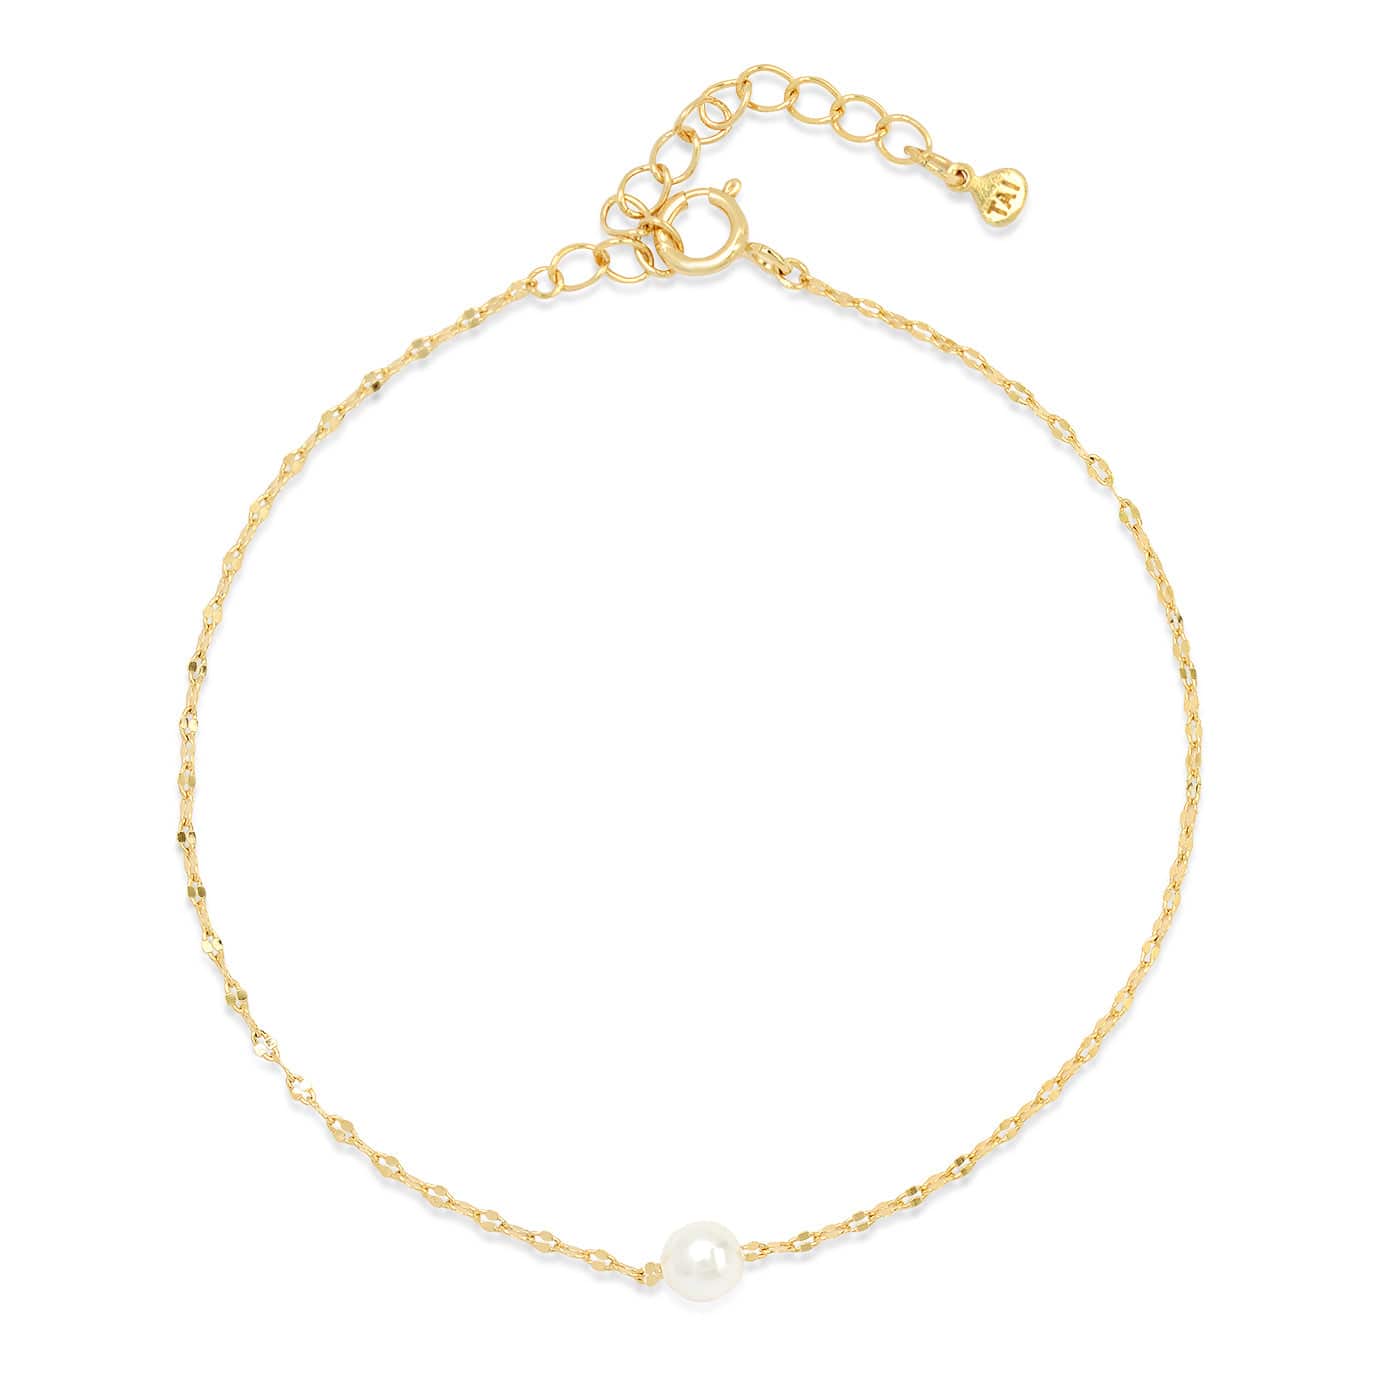 TAI JEWELRY Bracelet Gold Freshwater Pearl Delicate Chain Bracelet